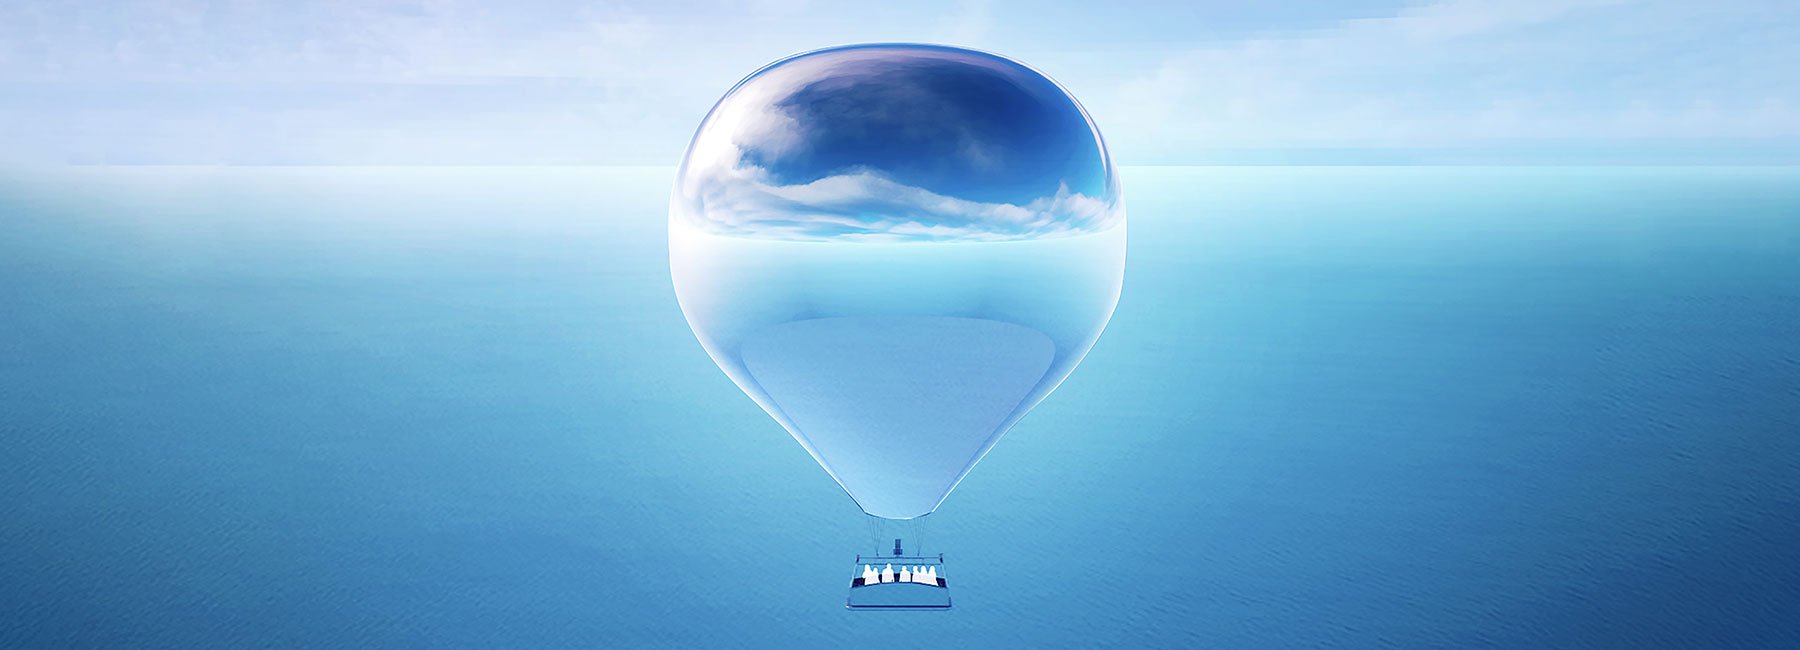 doug-aitken-new-horizon-trustees-mirror-hot-air-balloon-designboom-1800